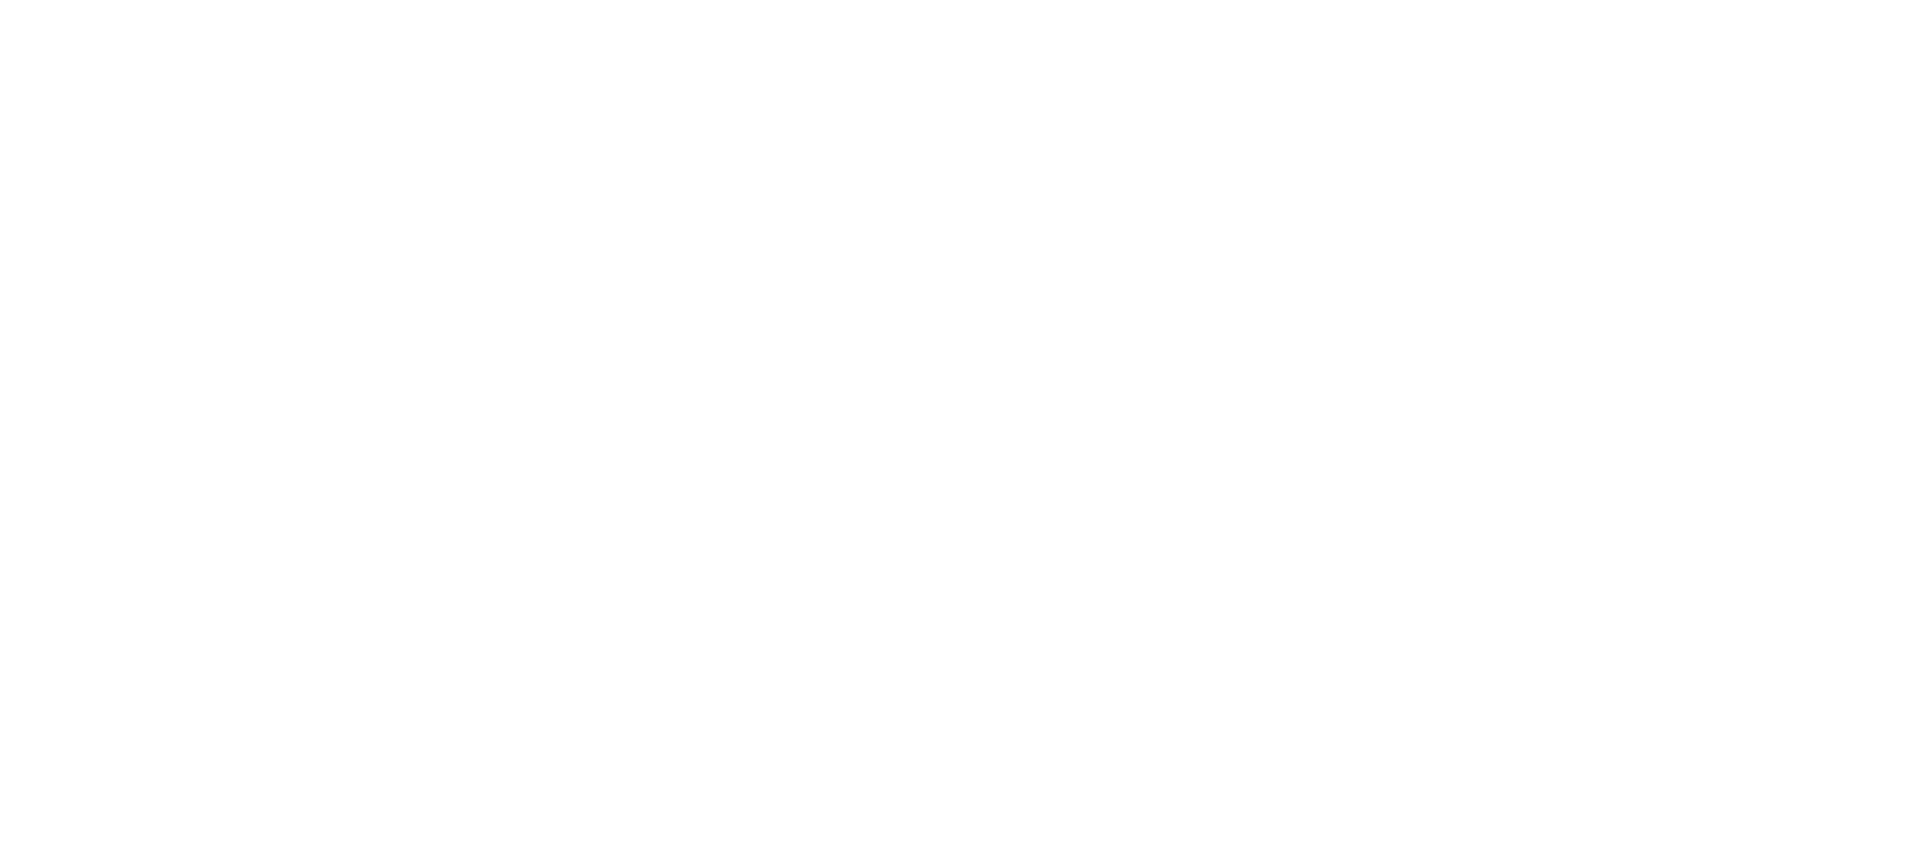 sod smith logo